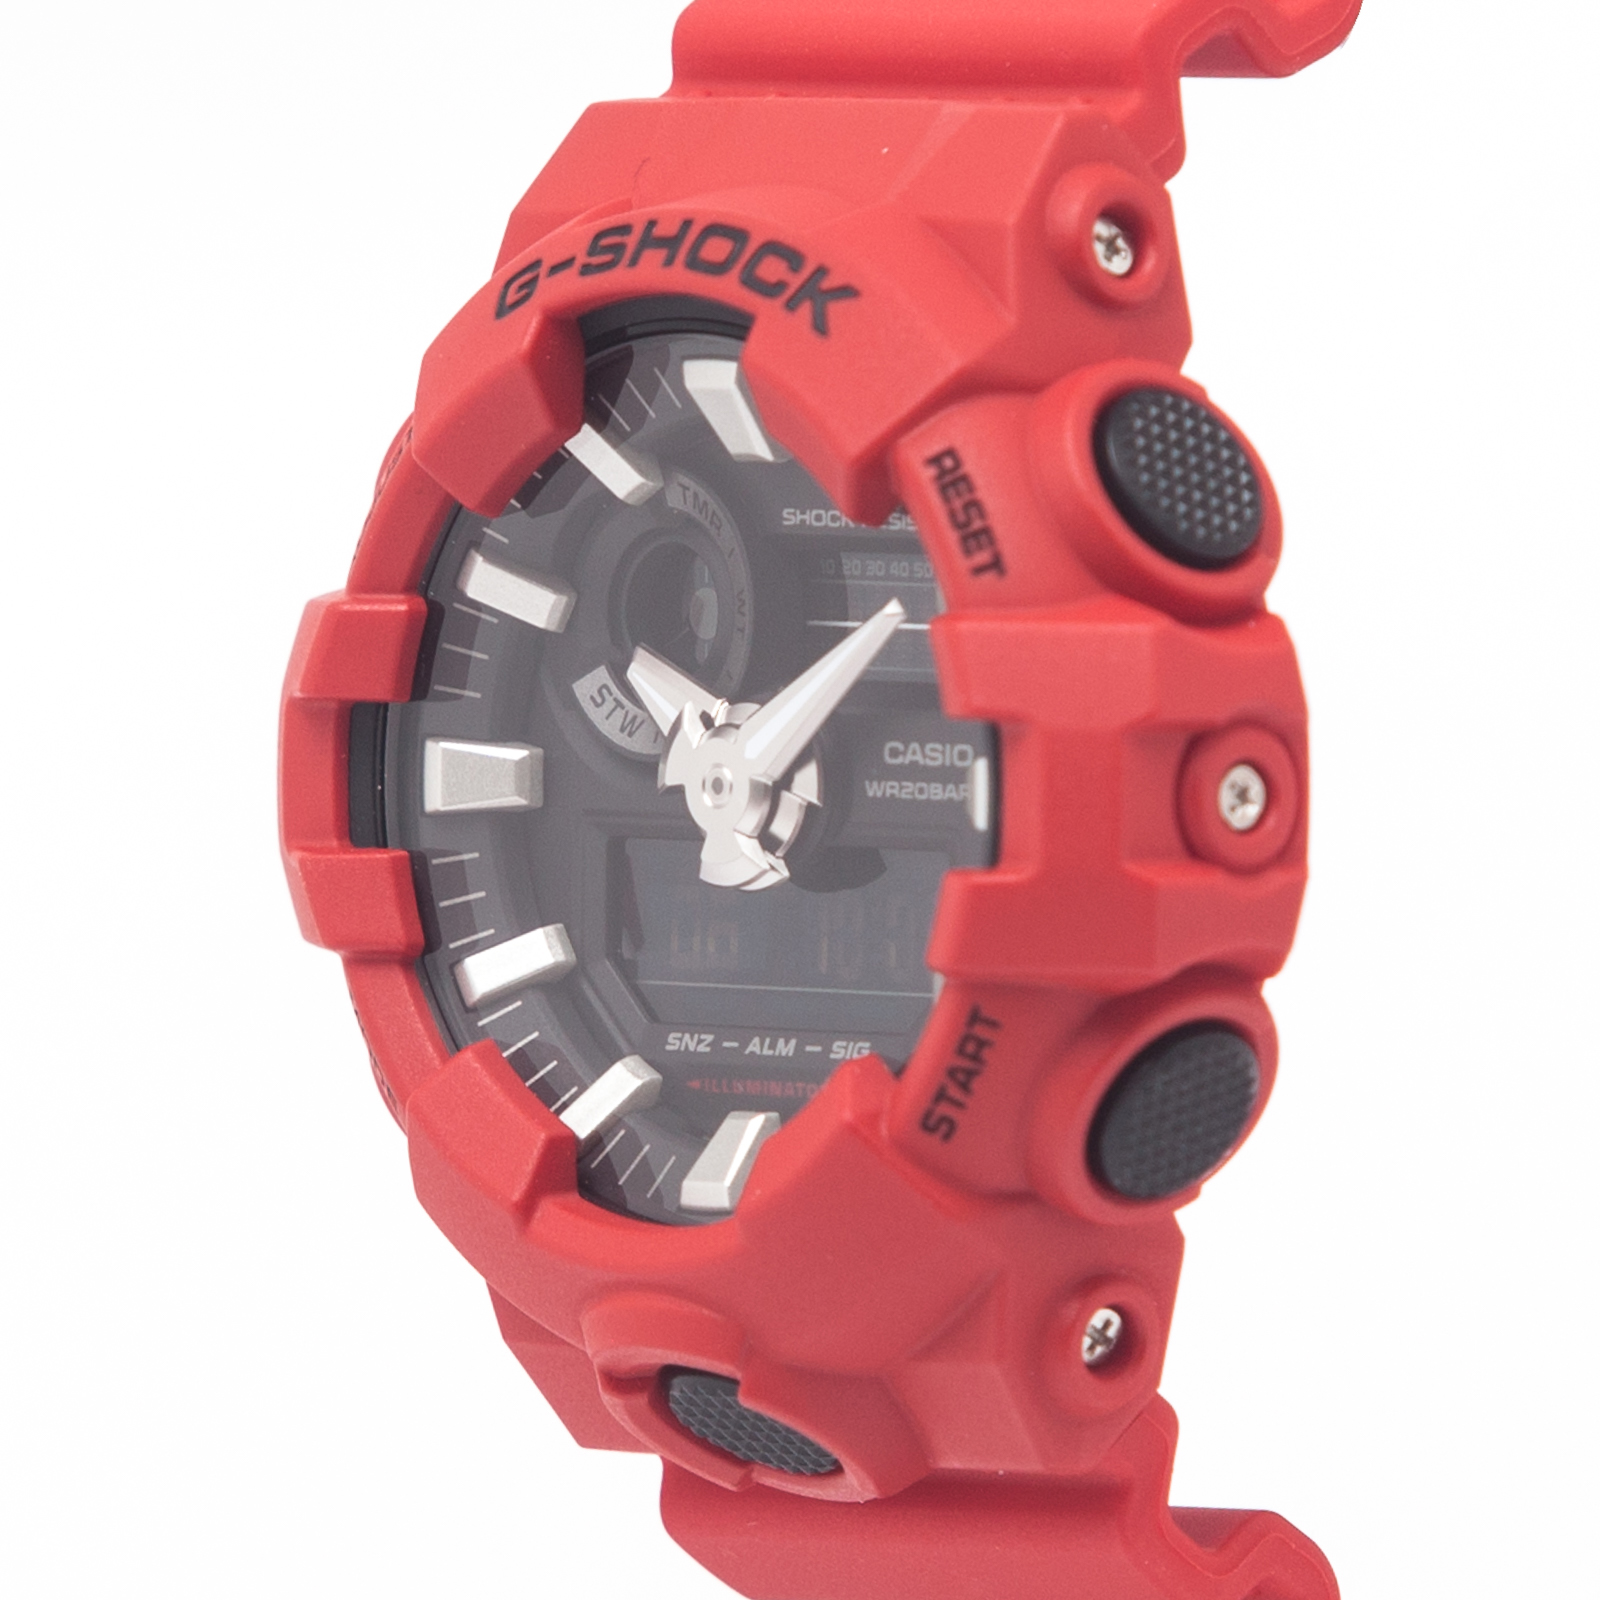 Reloj G-SHOCK GA-700-4ADR Resina Hombre Rojo